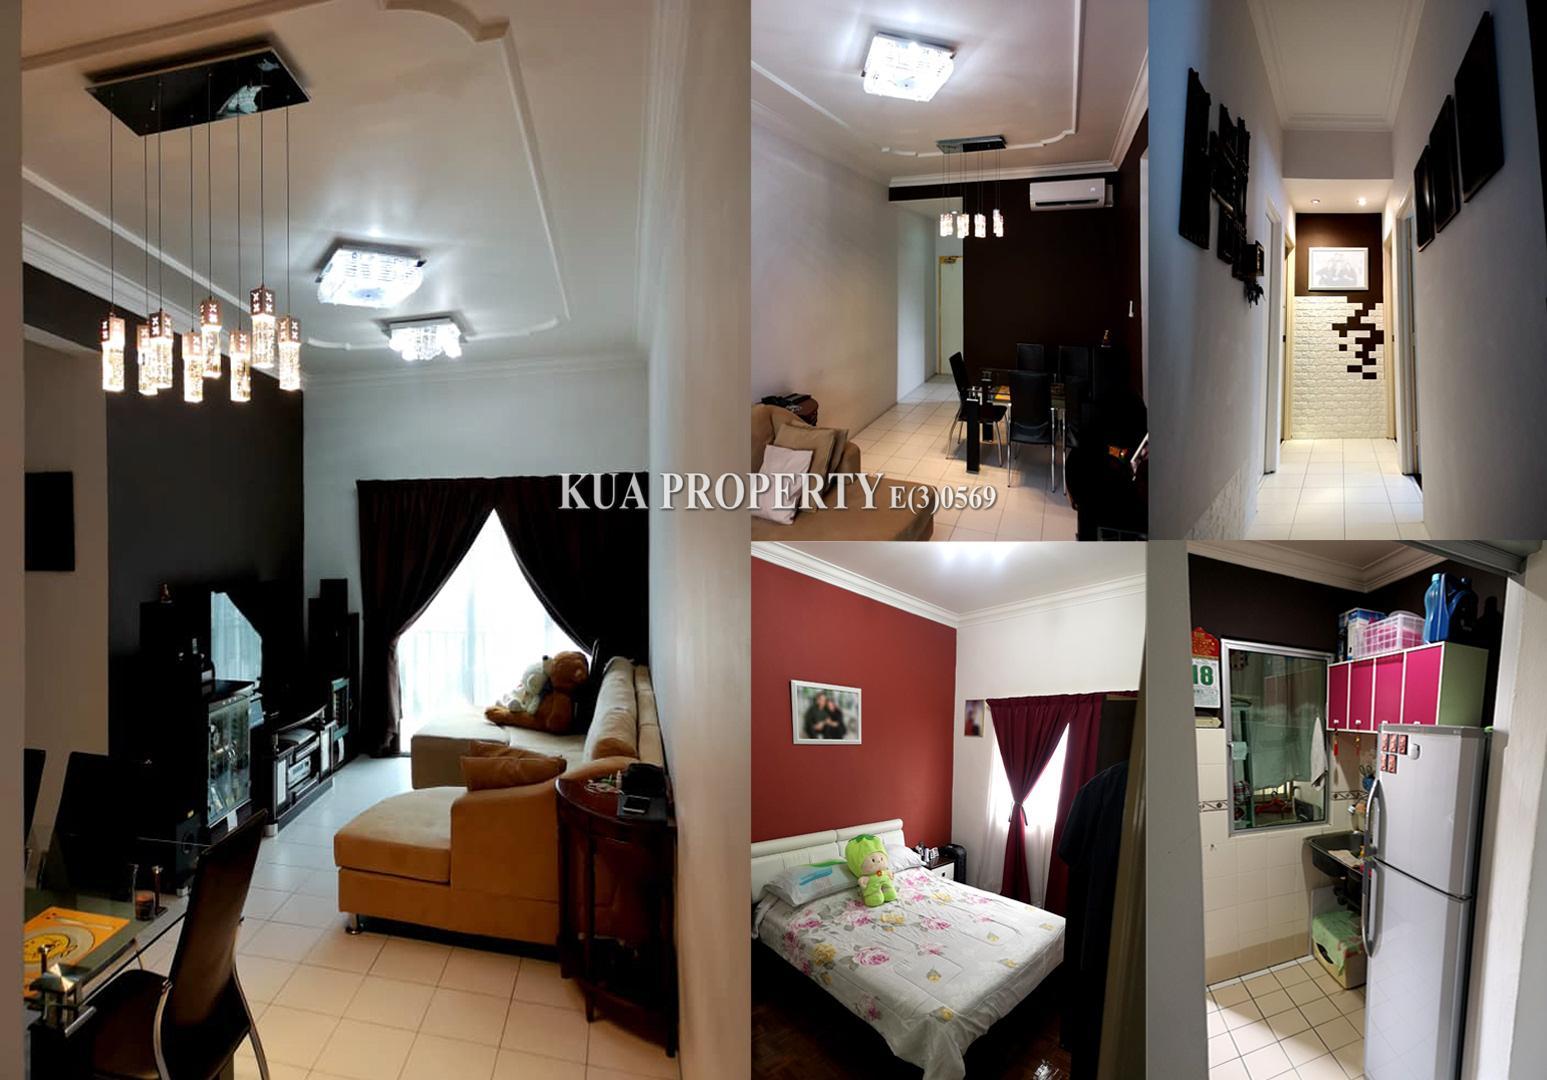 Courtyard Sanctuary Apartment For Sale! at MJC Batu Kawa, Kuching